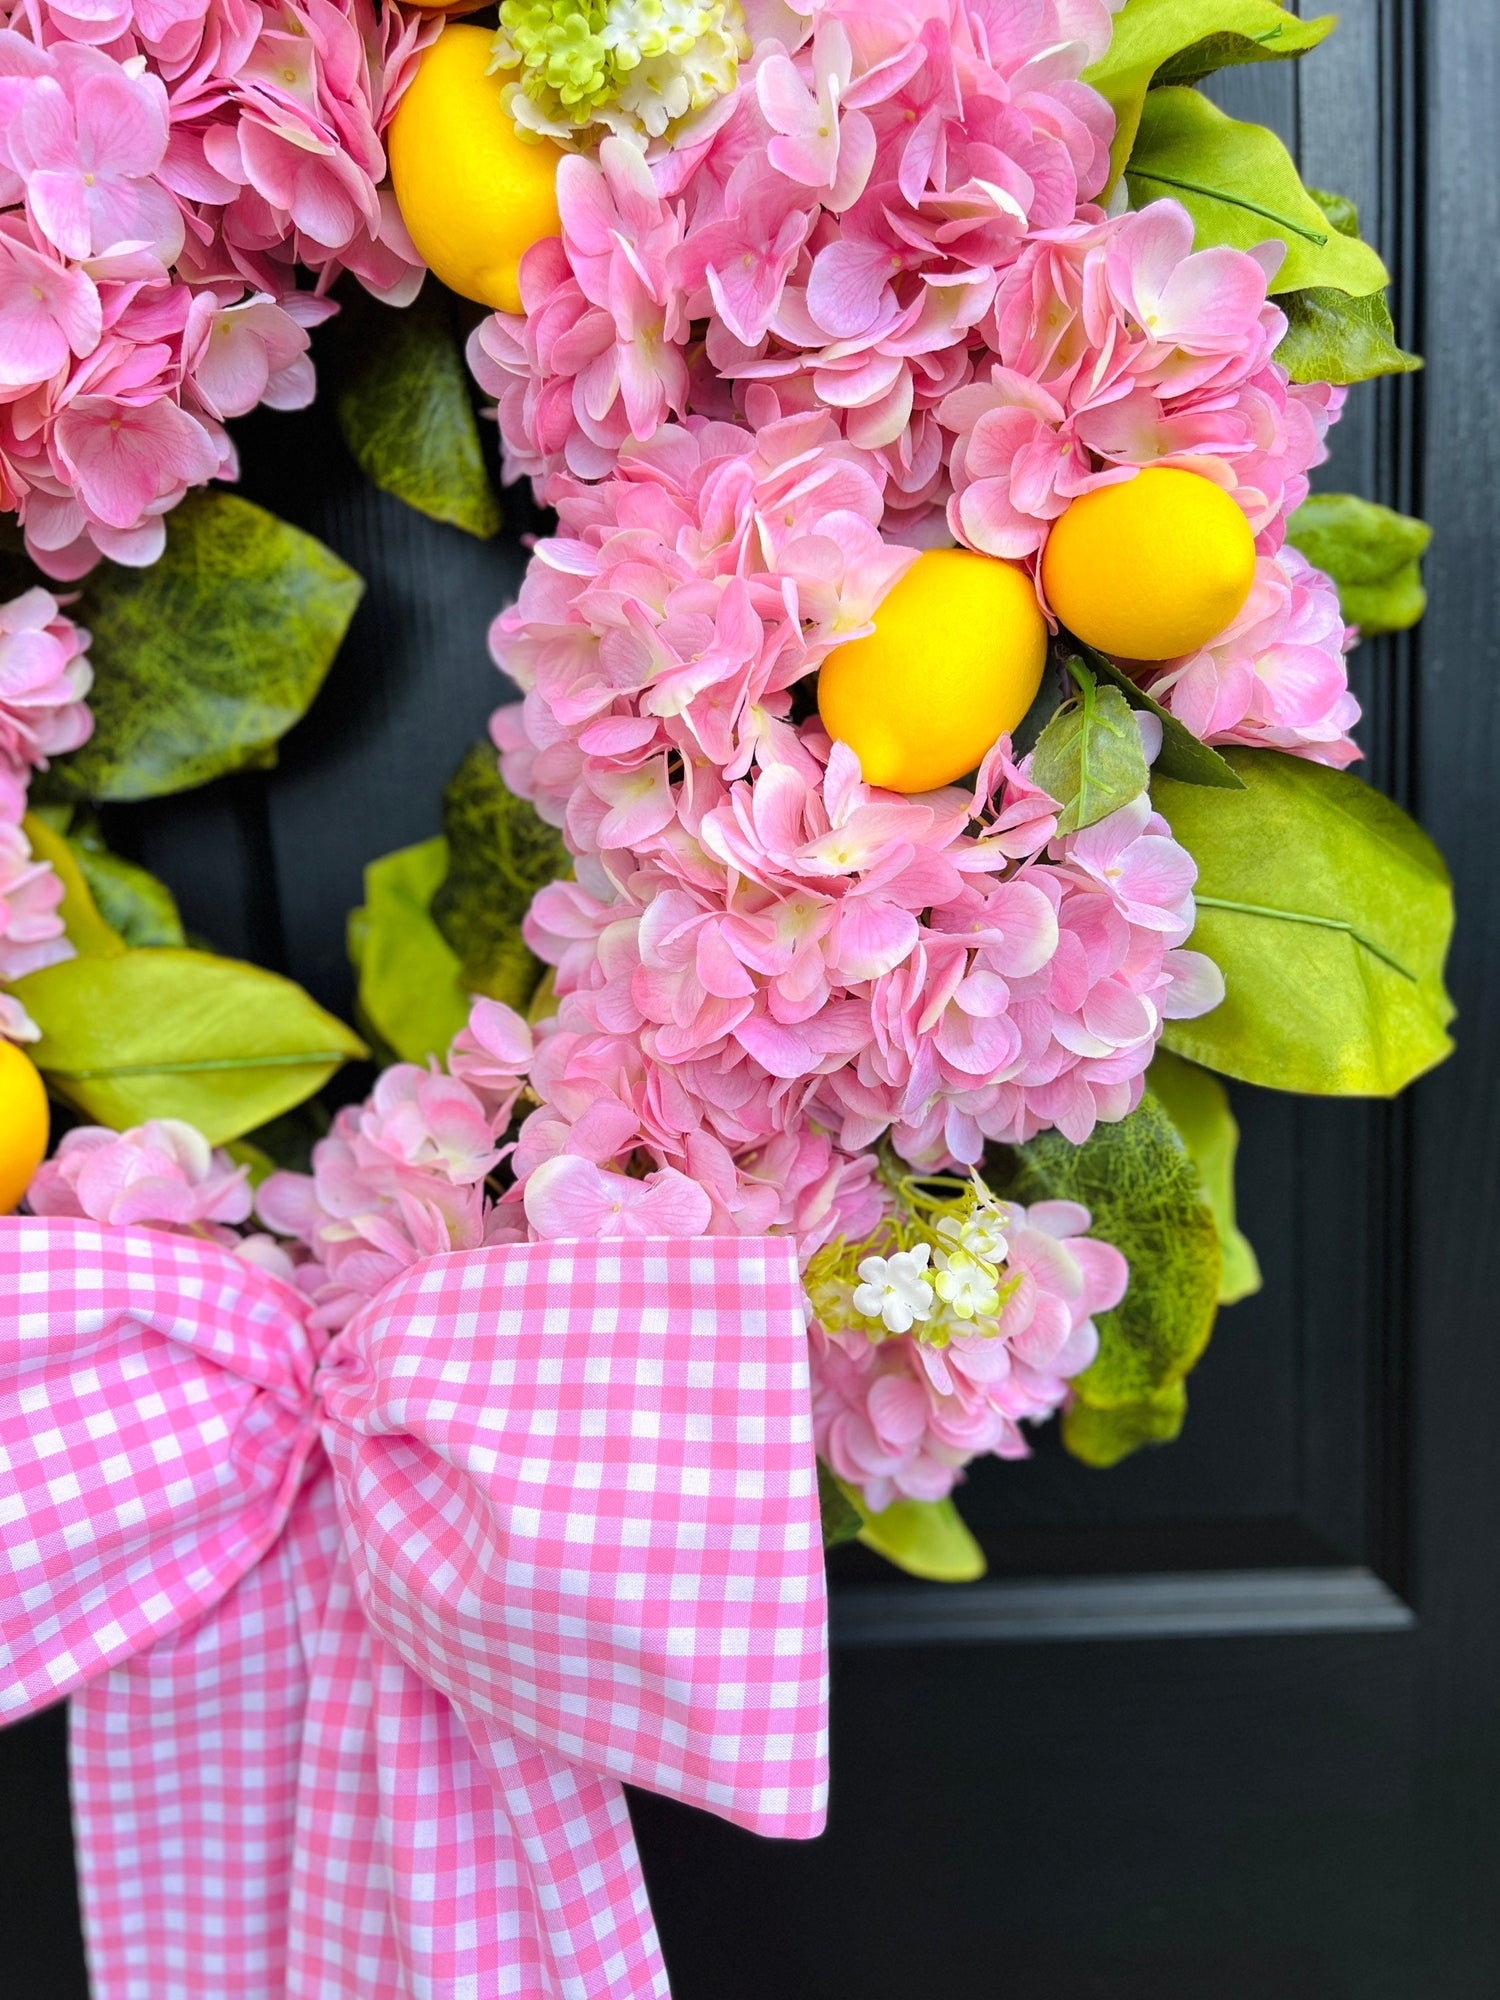 The pink hydrangea and lemon wreath